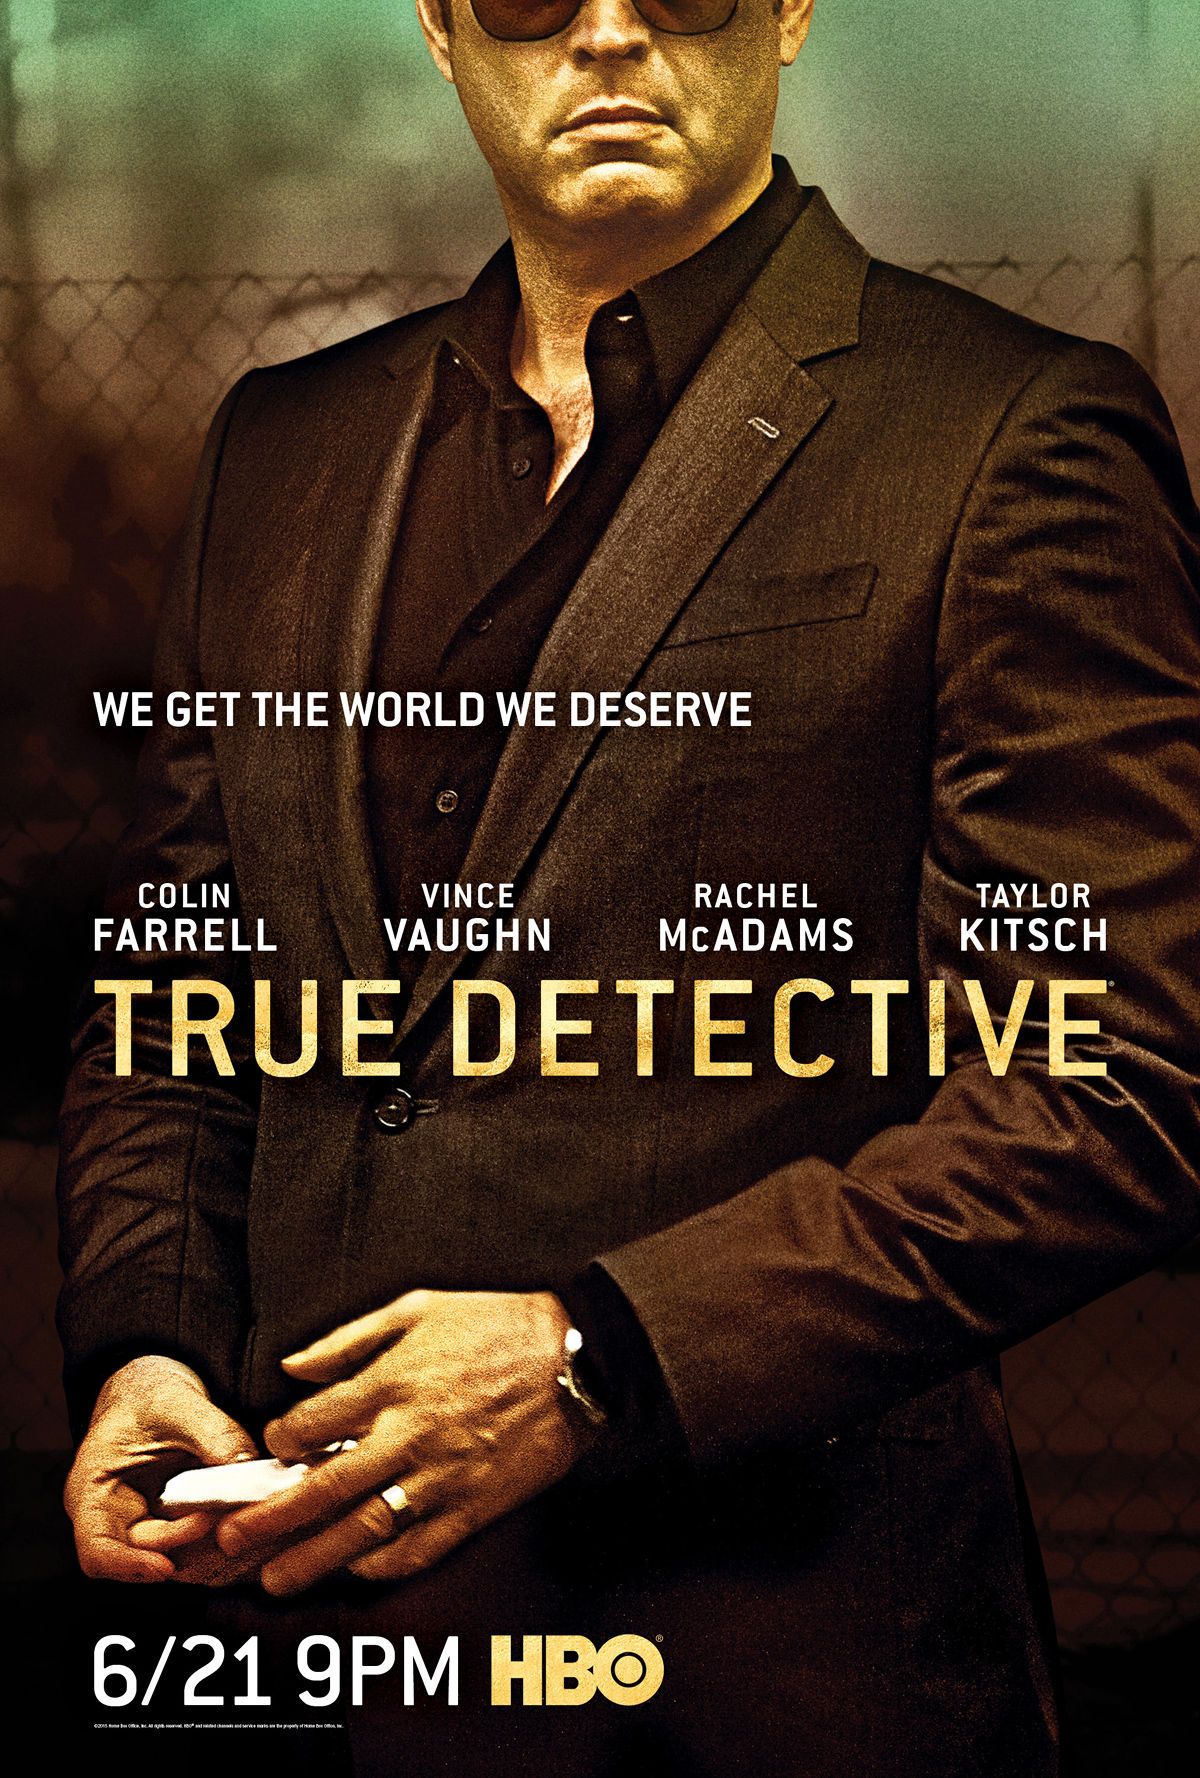 True Detective Season 2 - Vince Vaughn Character Poster